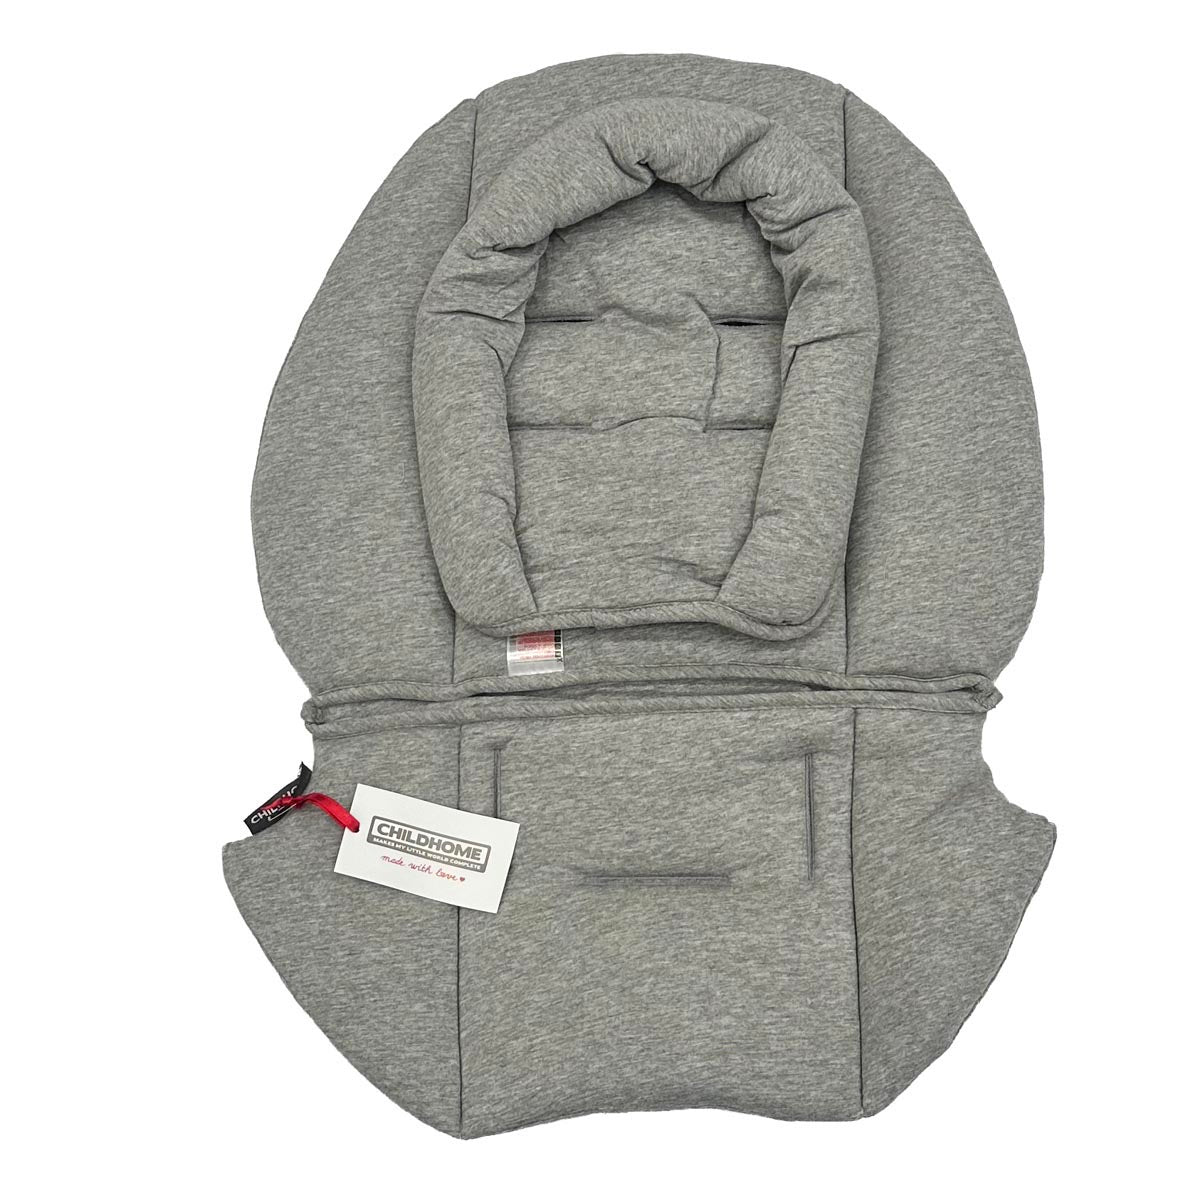 Childhome Evolu 2 Newborn Seat Cushion